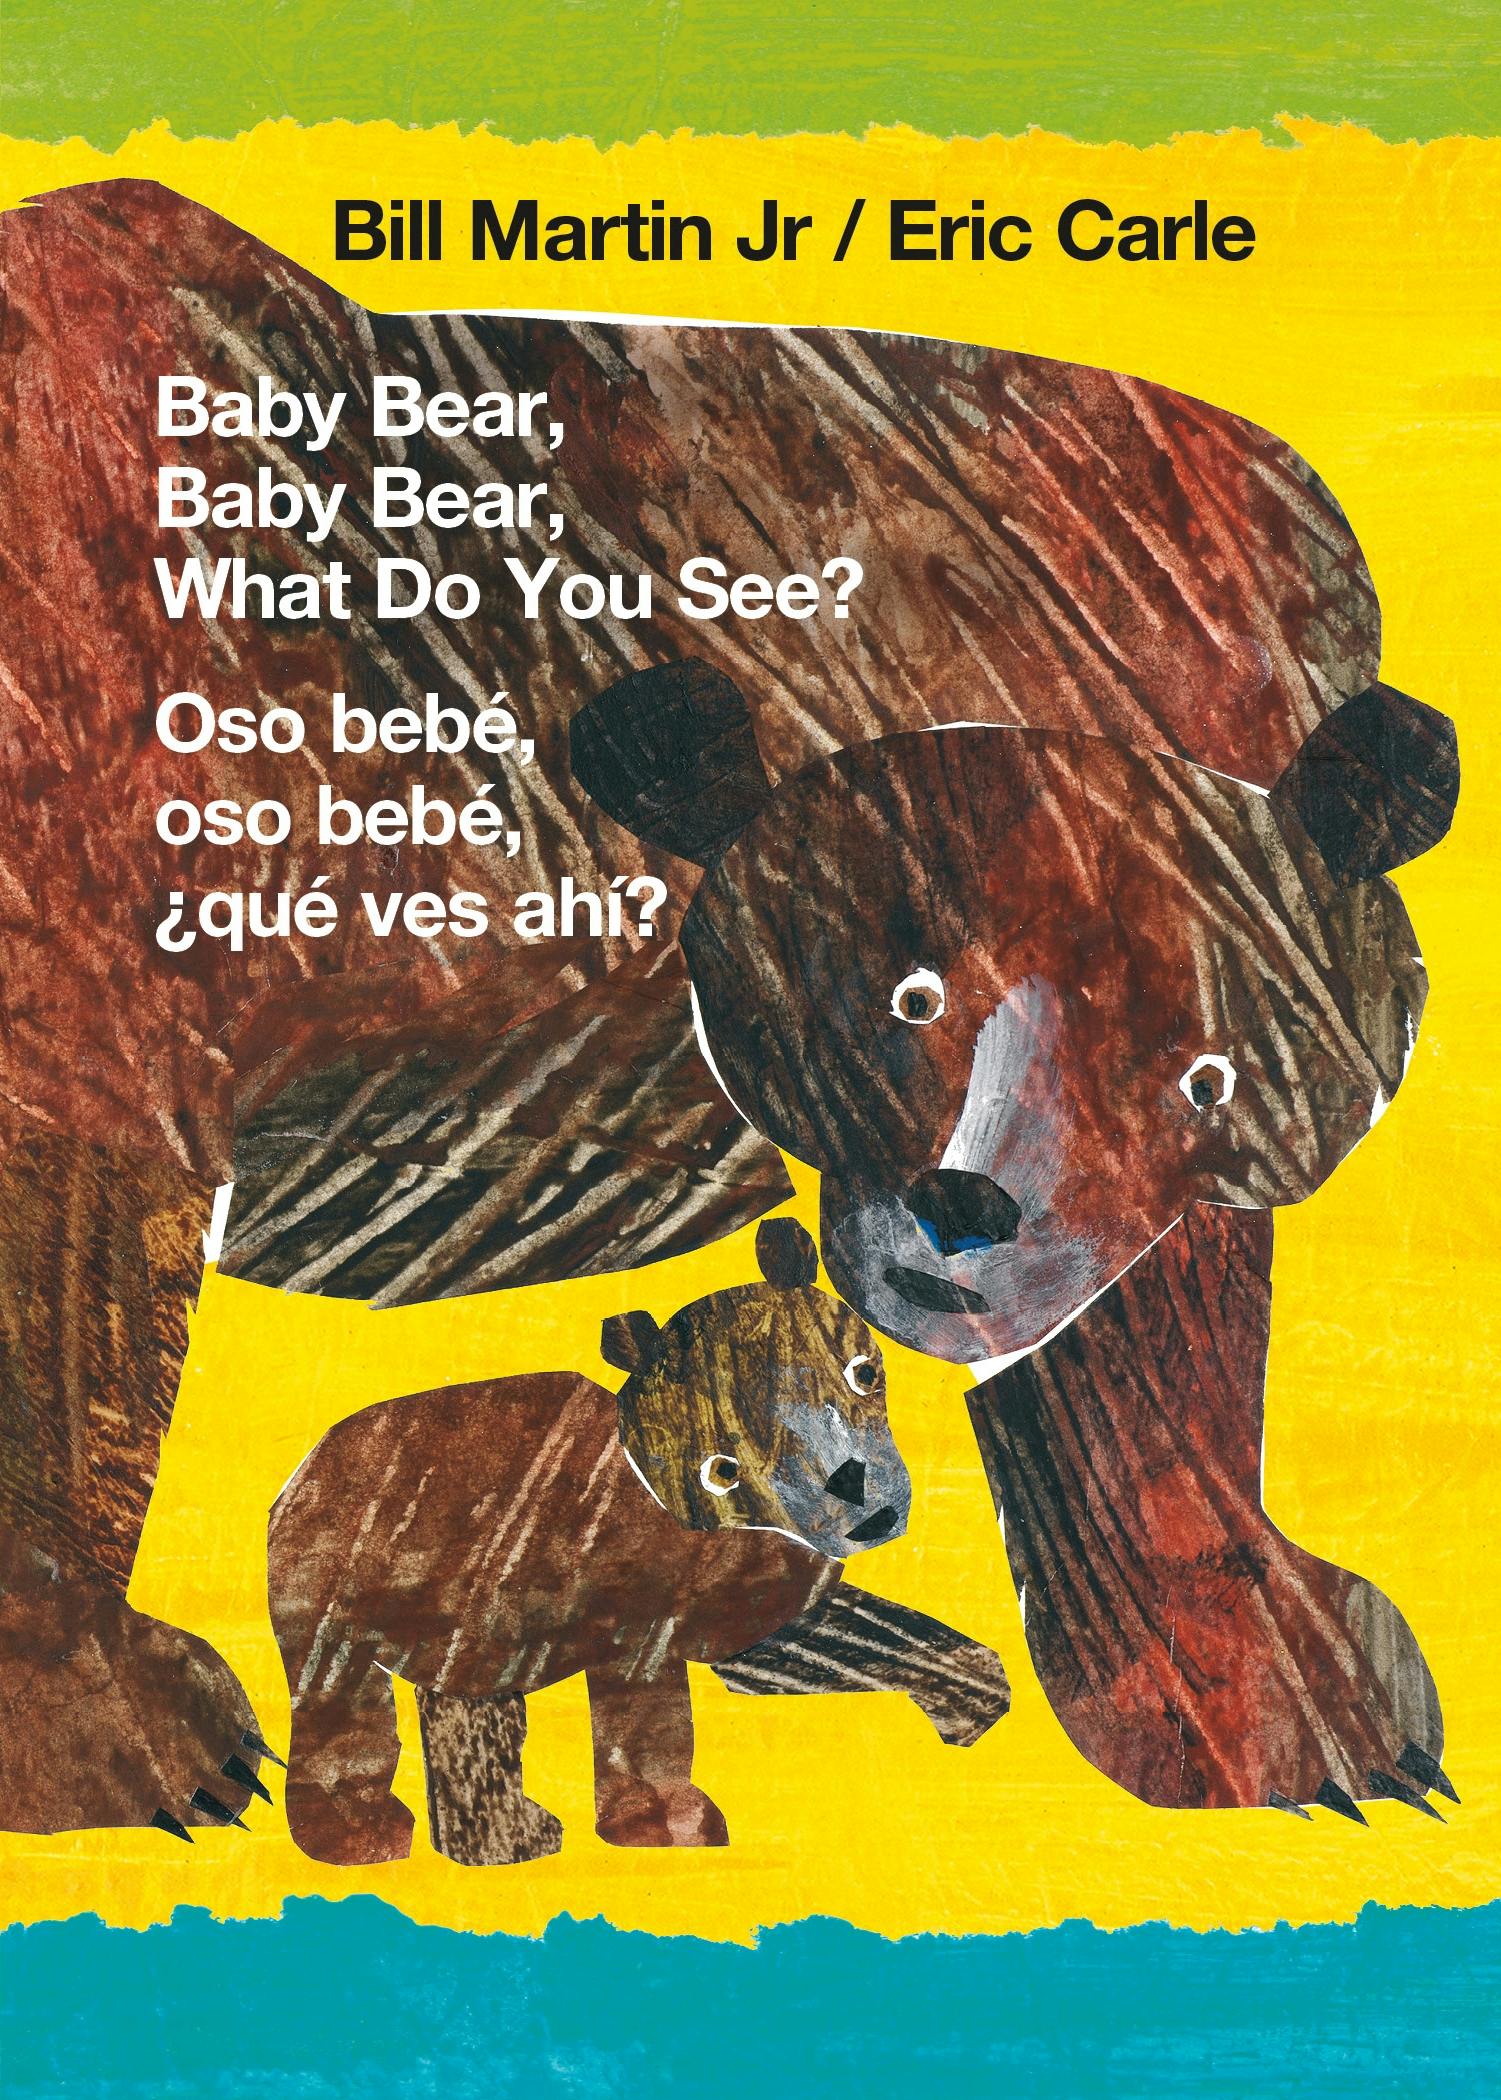 Image of Baby Bear, Baby Bear, What Do You See? / Oso bebé, oso bebé, ¿qué ves ahí? (Bilingual board book - English / Spanish)